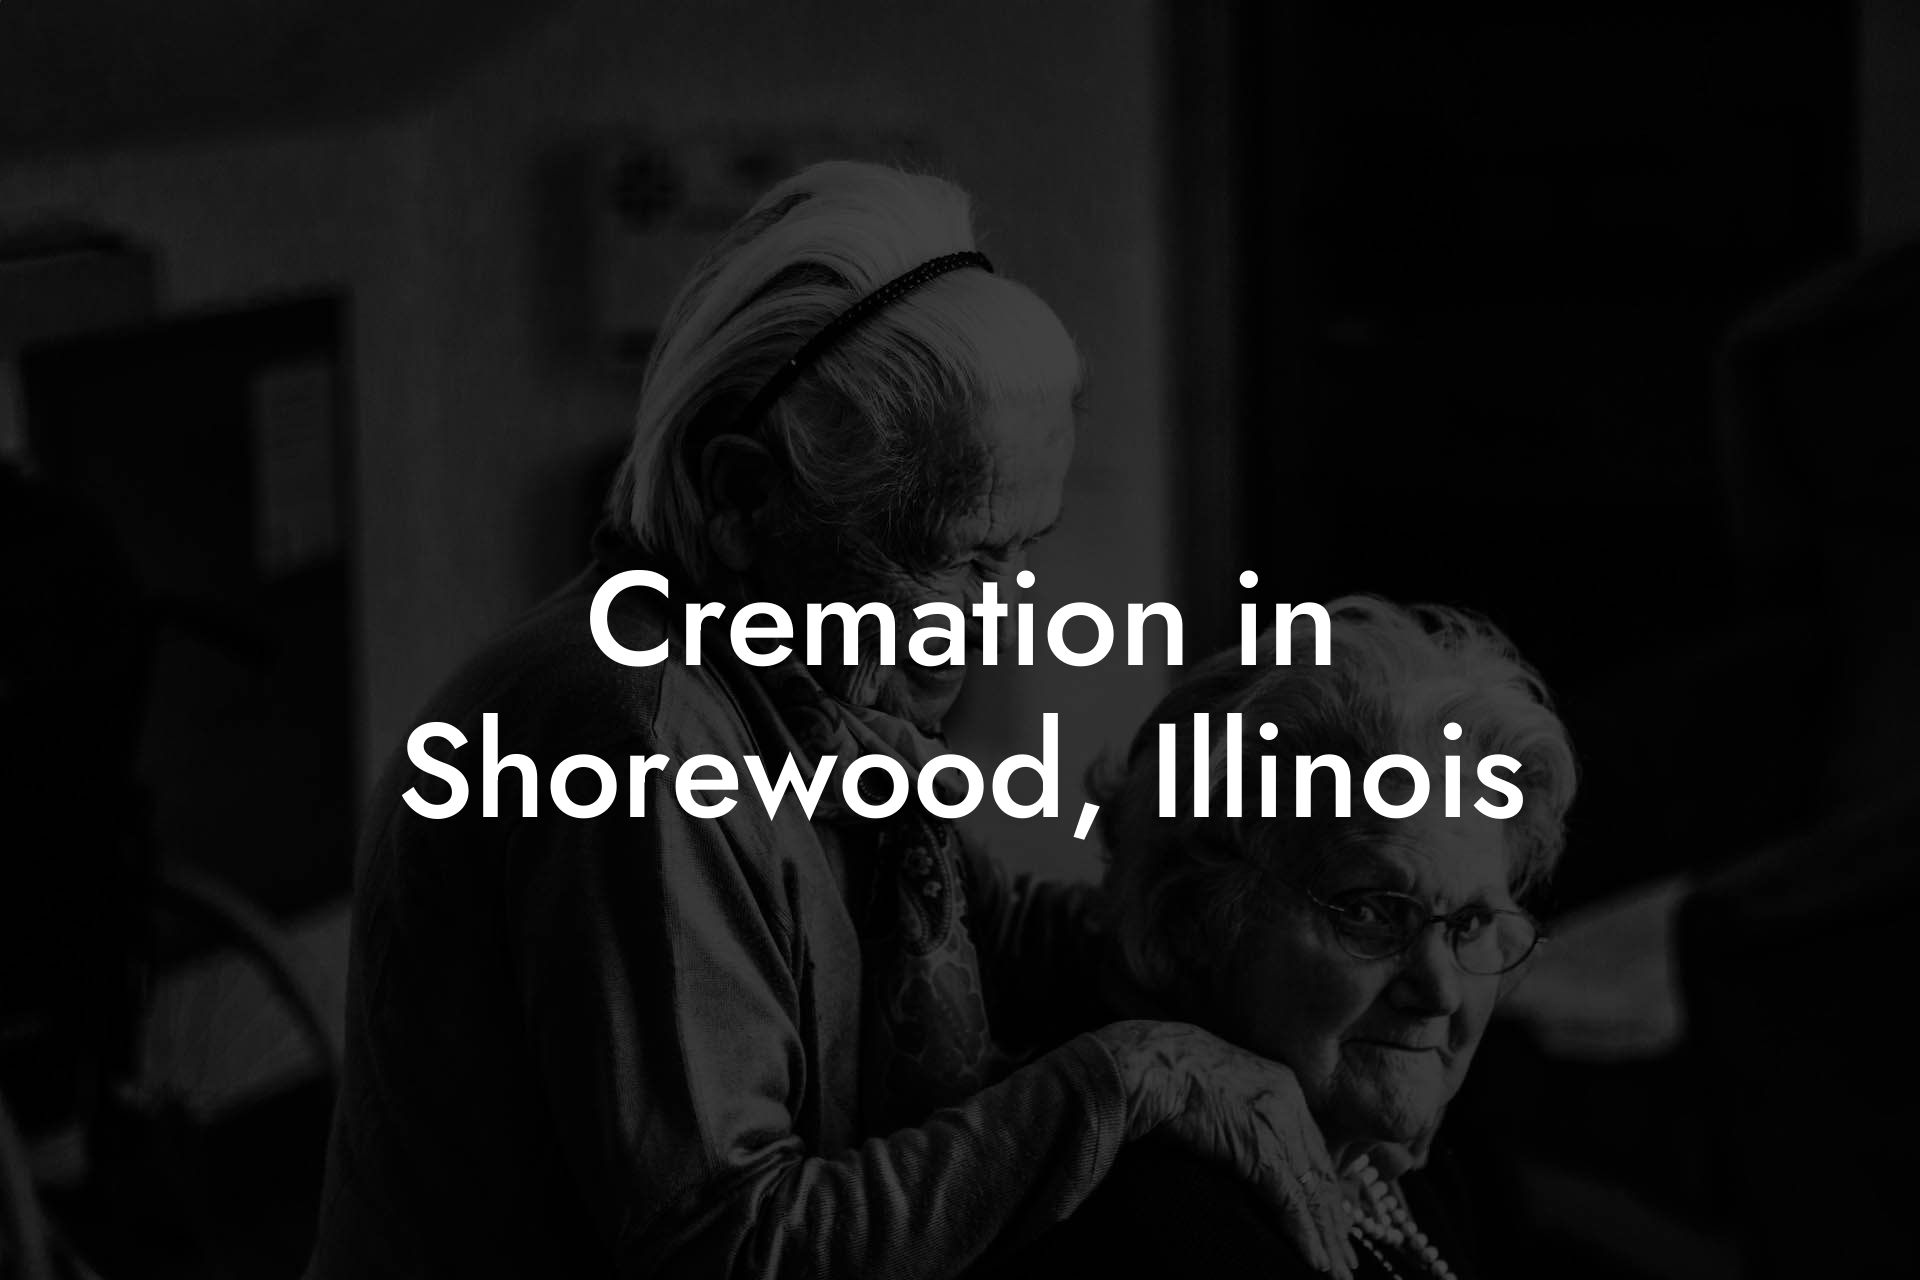 Cremation in Shorewood, Illinois